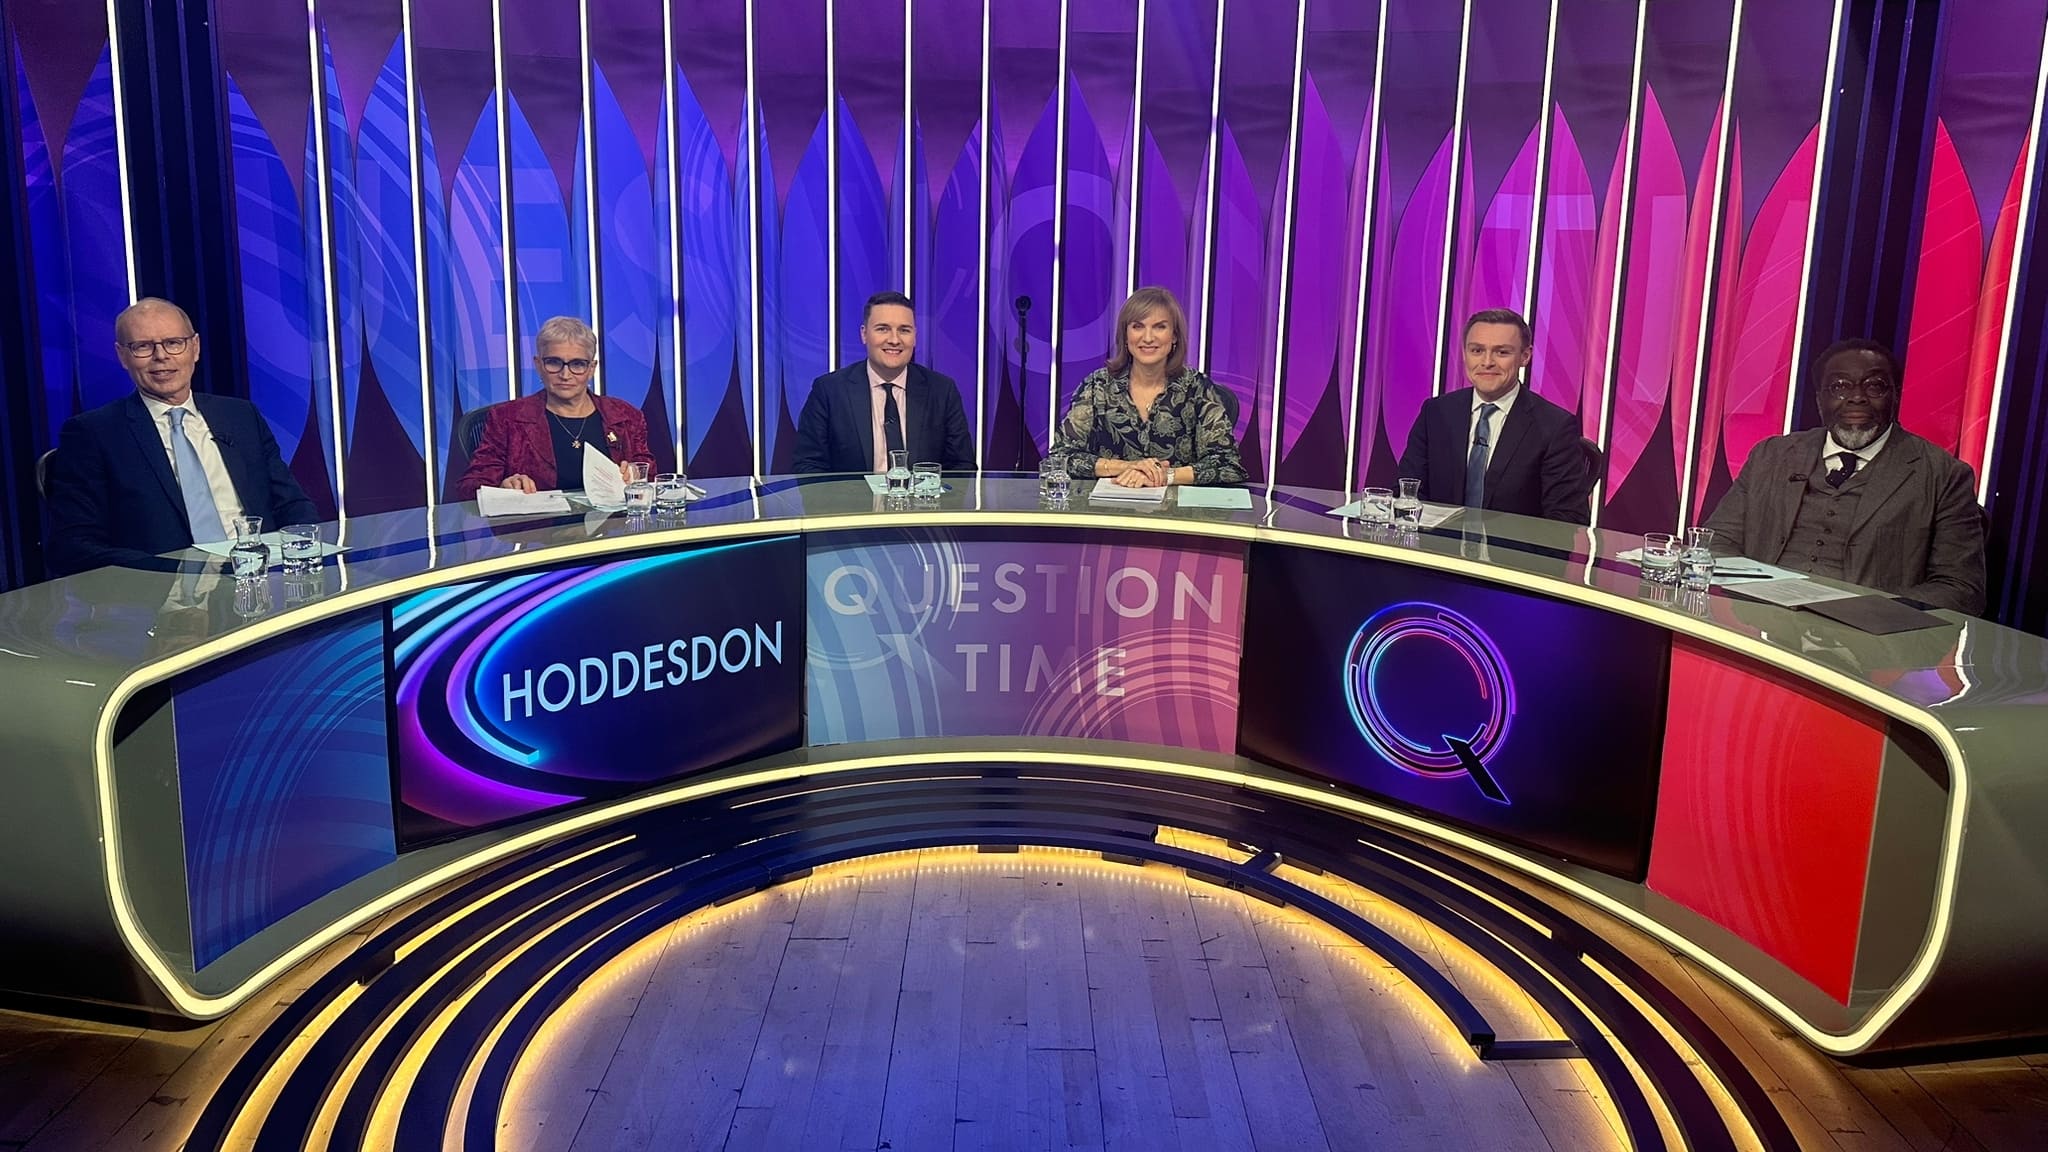 Question Time Staffel 45 :Folge 2 